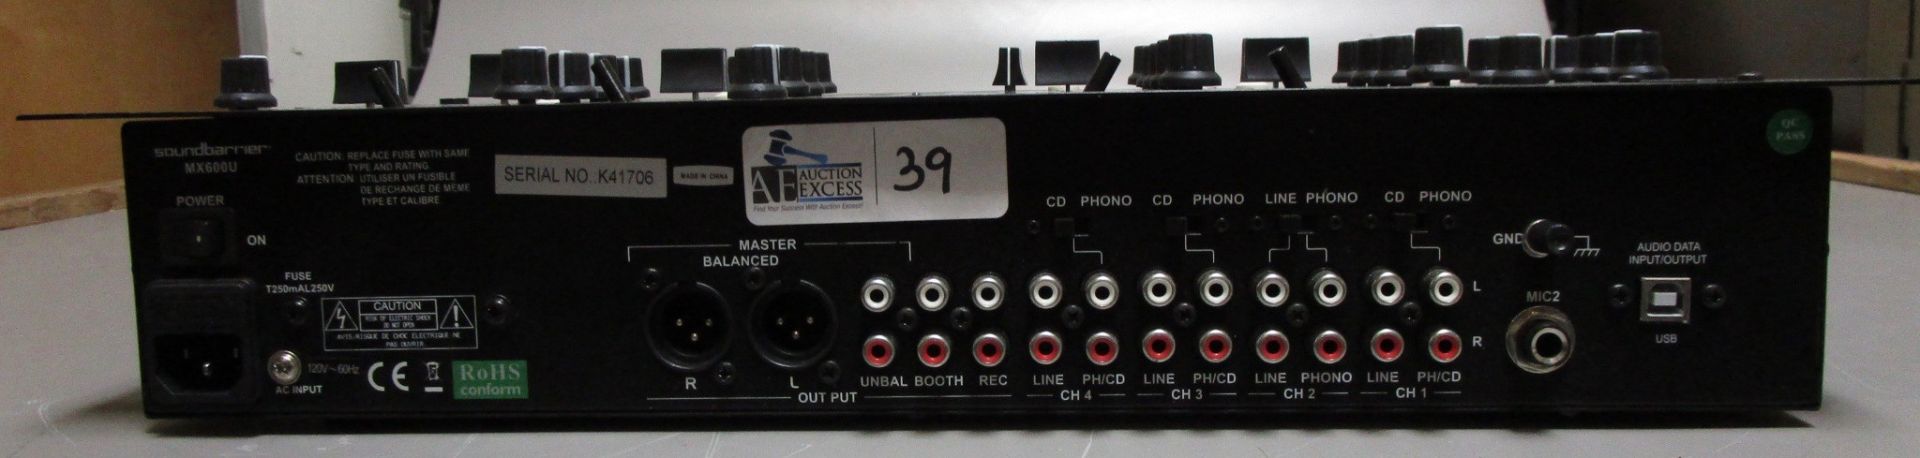 SOUND BARRIER MX-600U AUDIO MIXER - Image 2 of 2